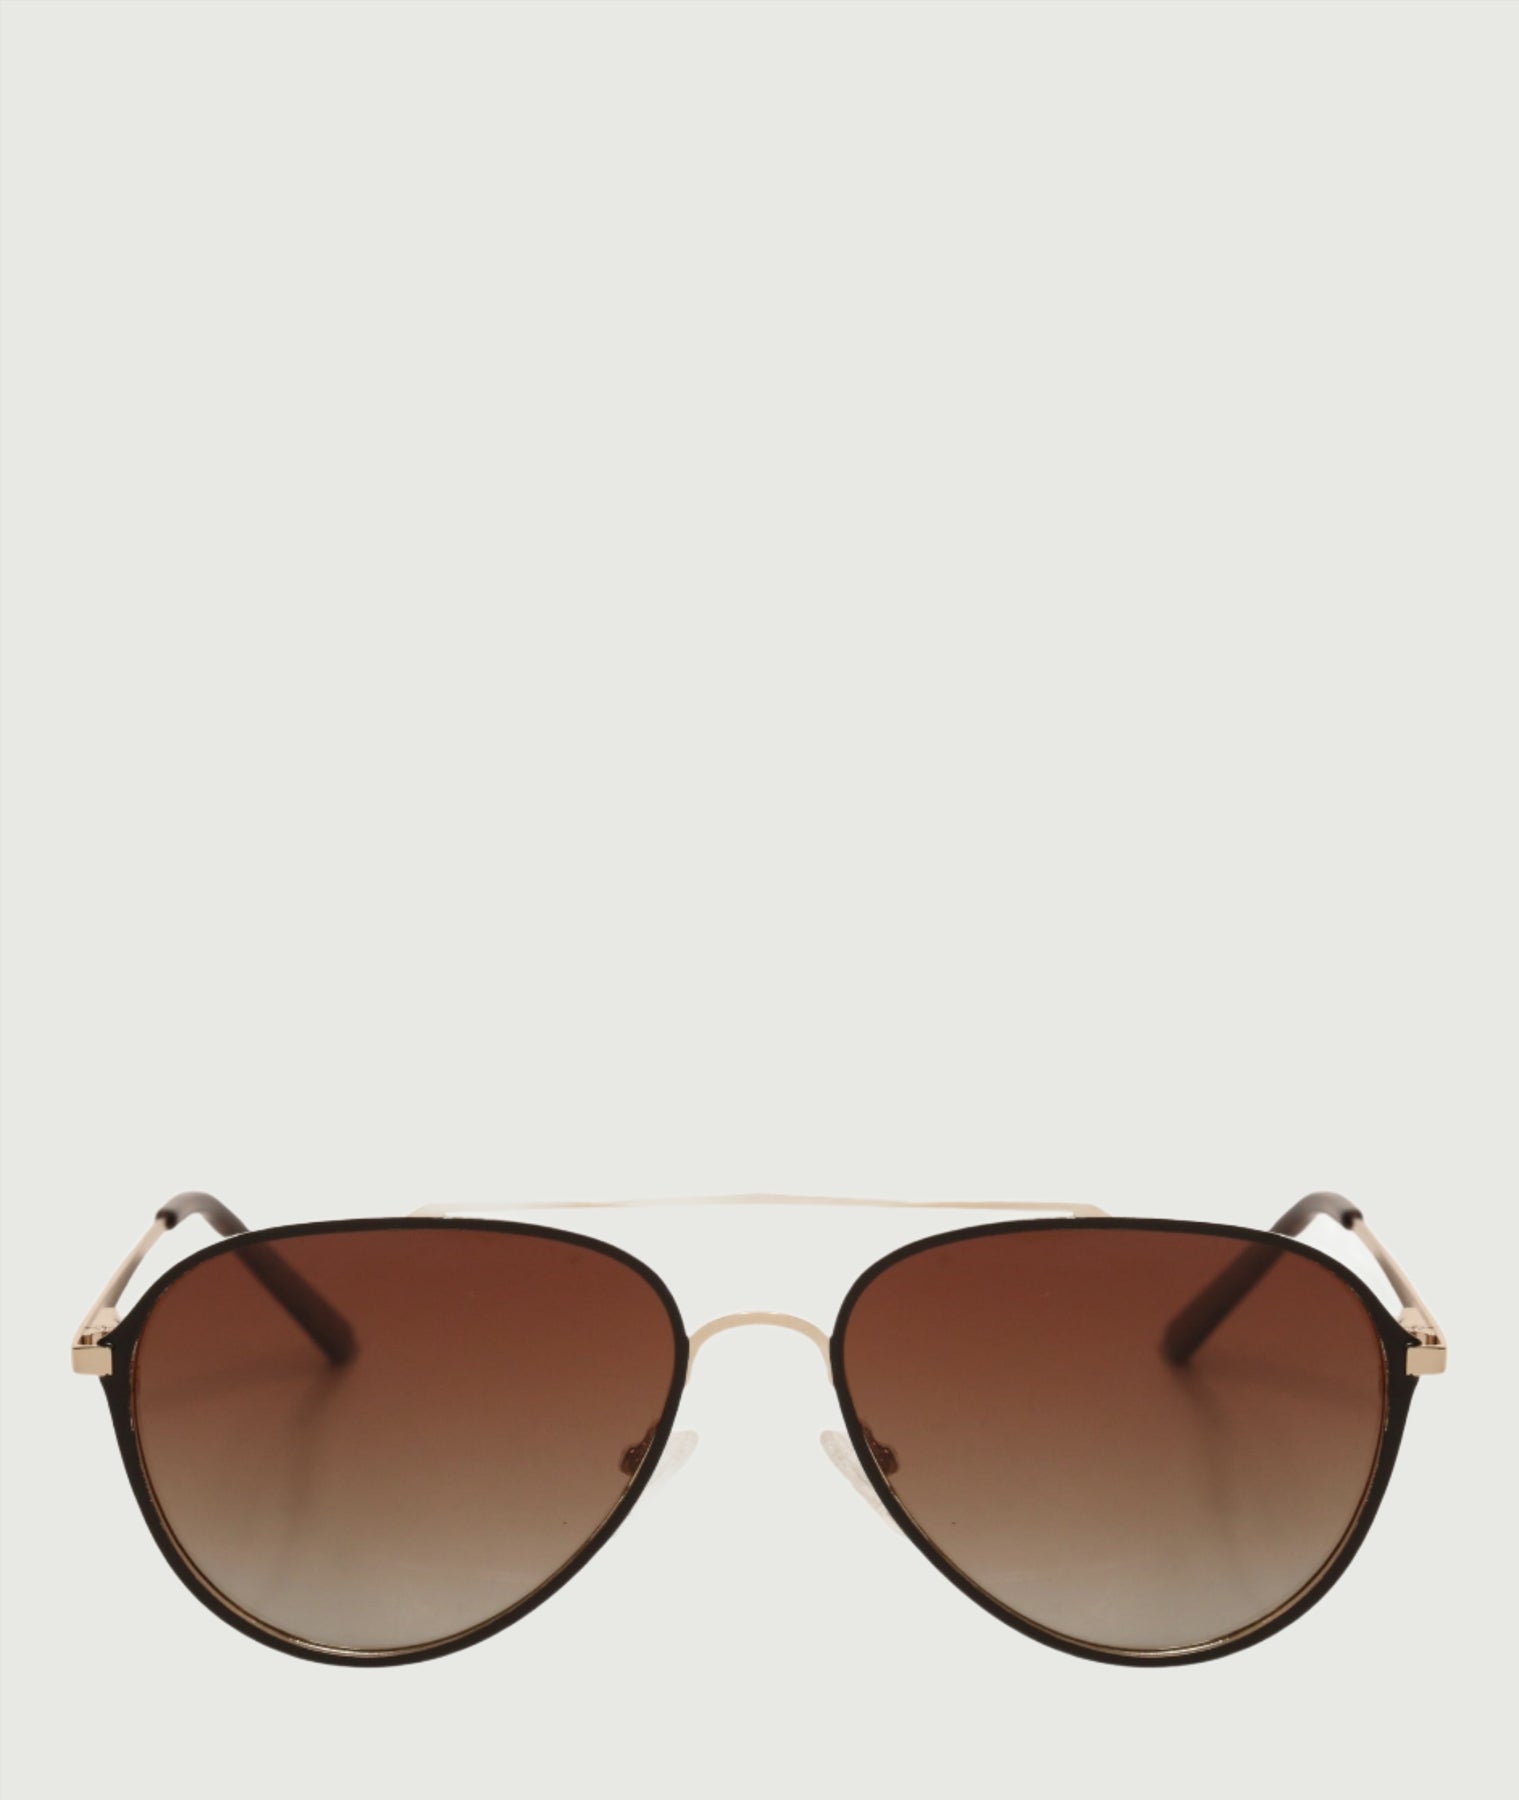 Superfine Luxury Polarised Sunglasses, Watches and Fragrance